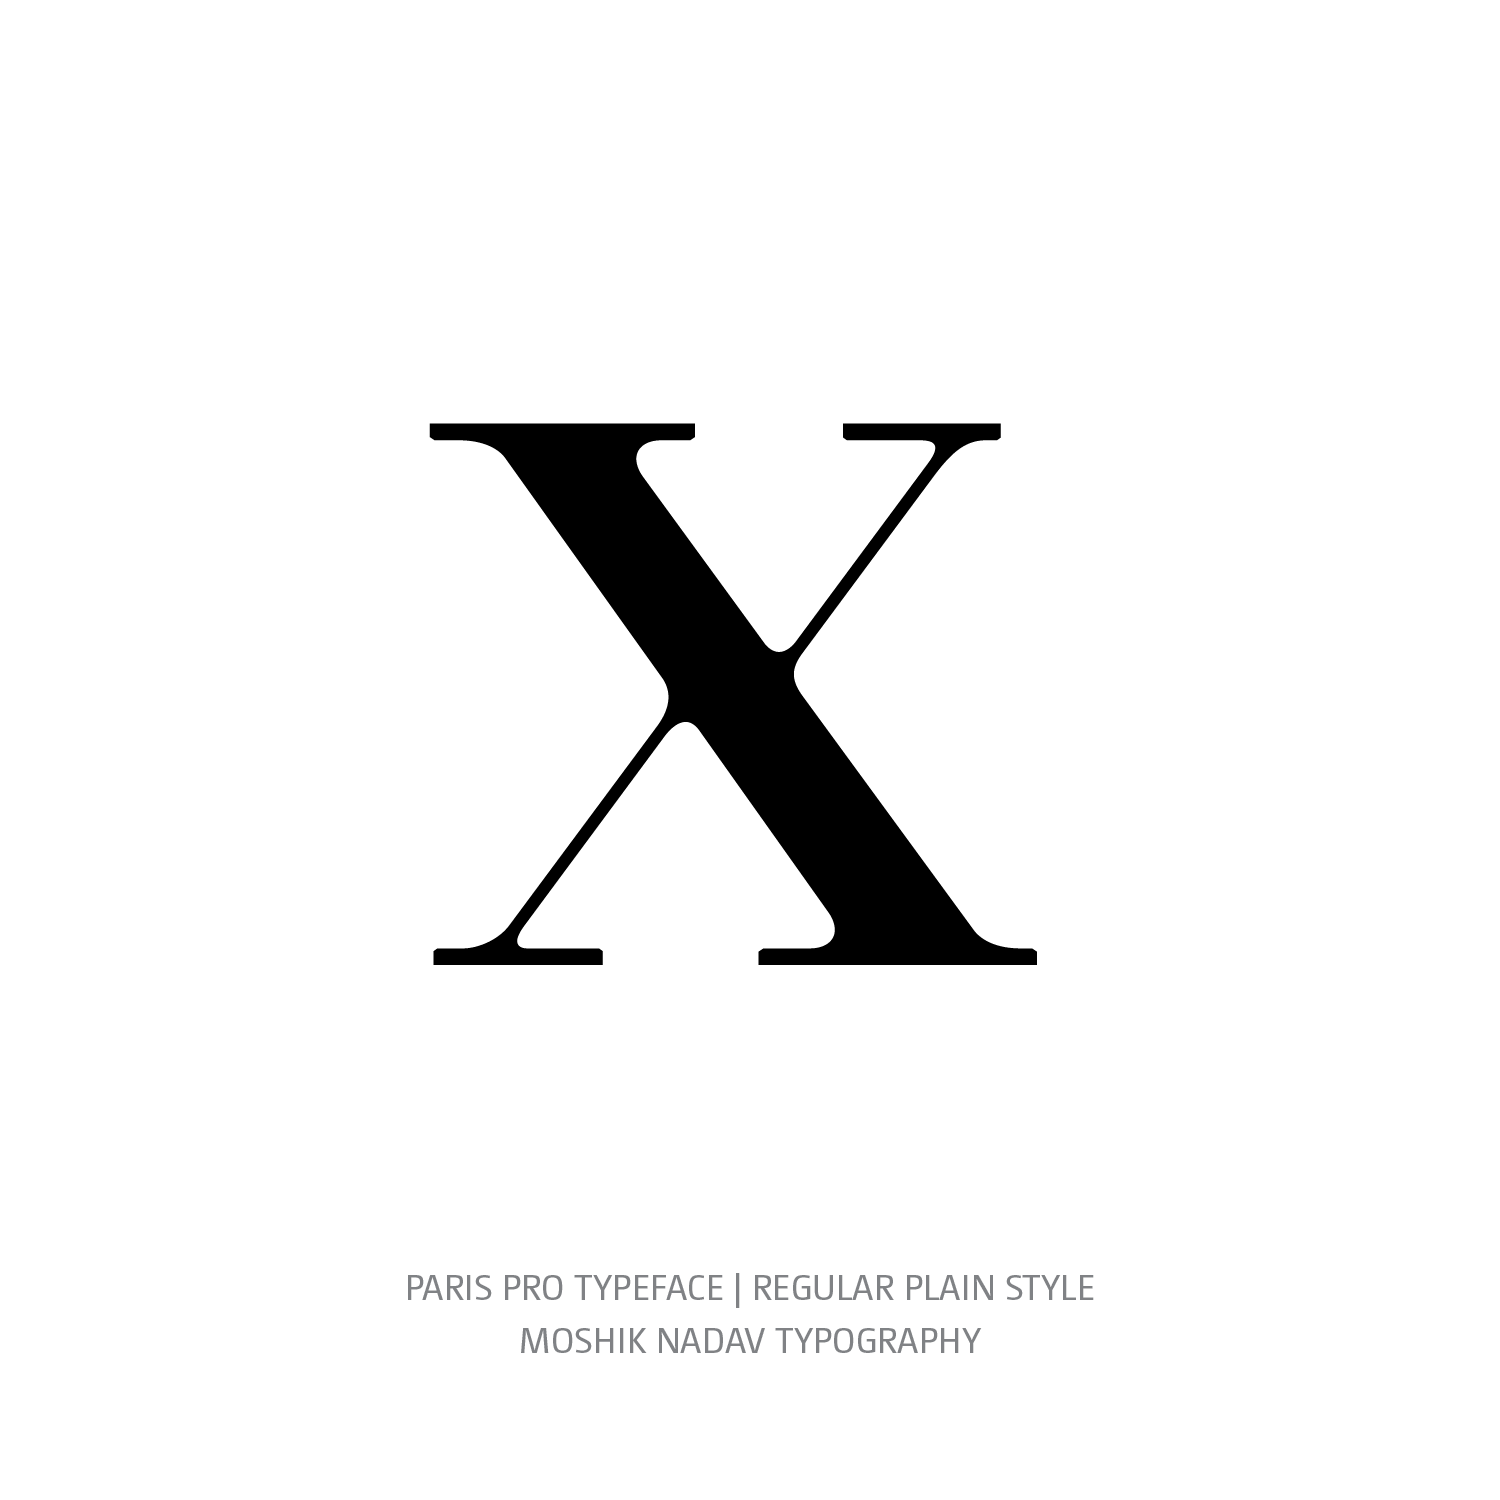 Paris Pro Typeface Regular Plain x